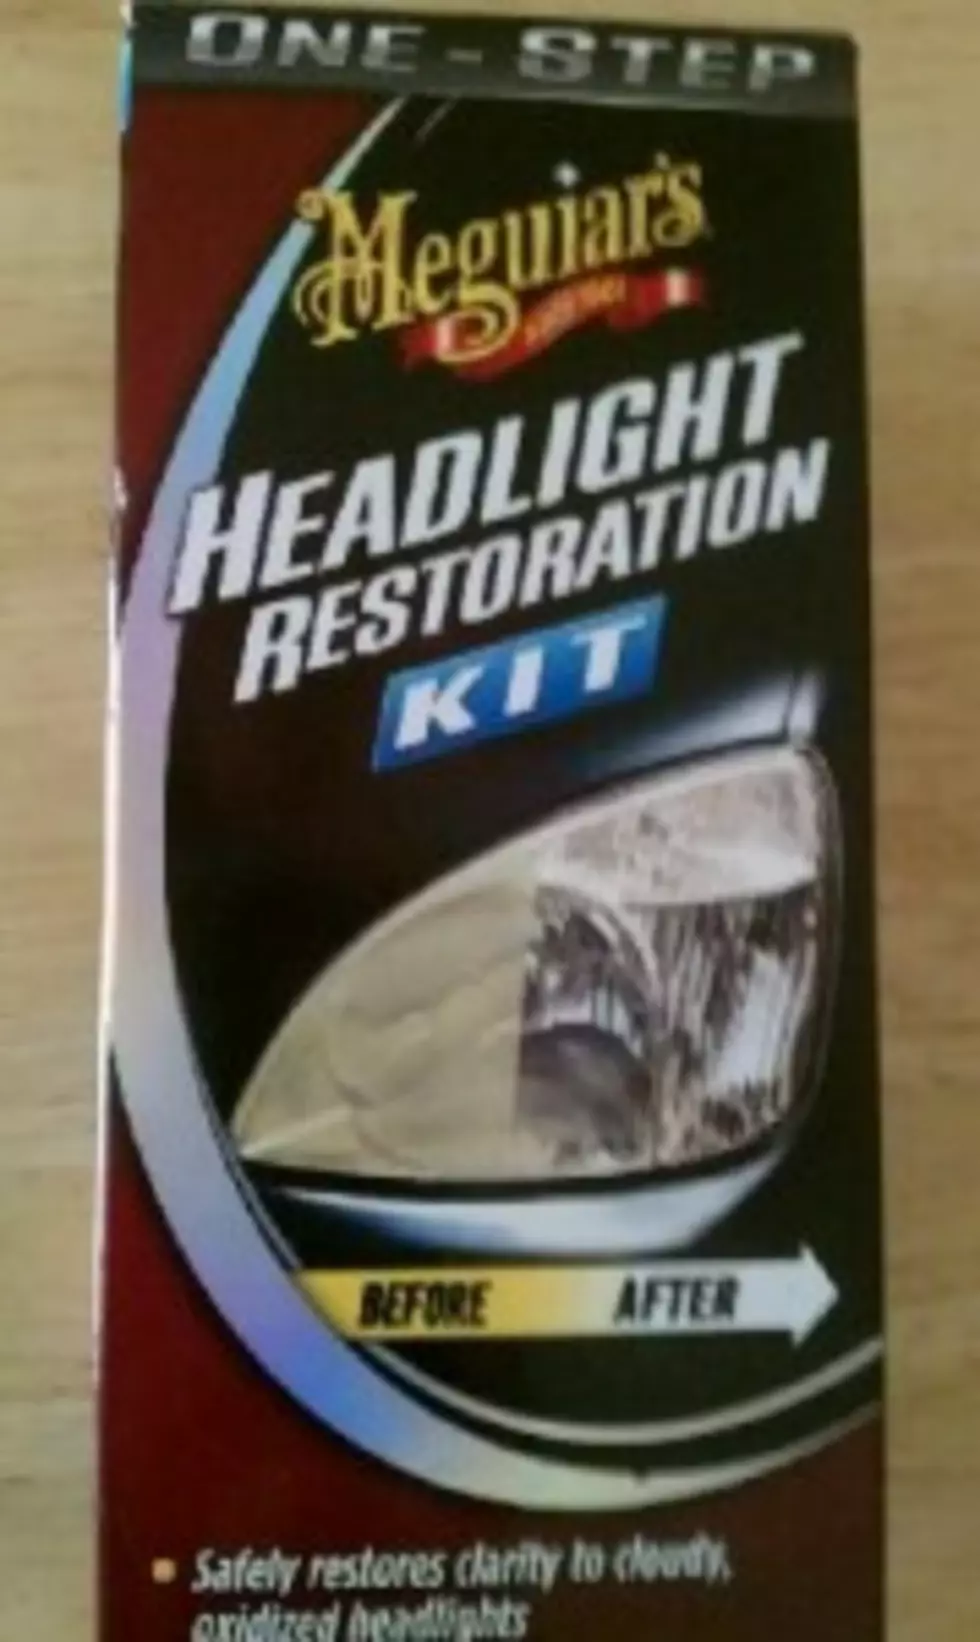 Do Headlight Restoration Kits Work?